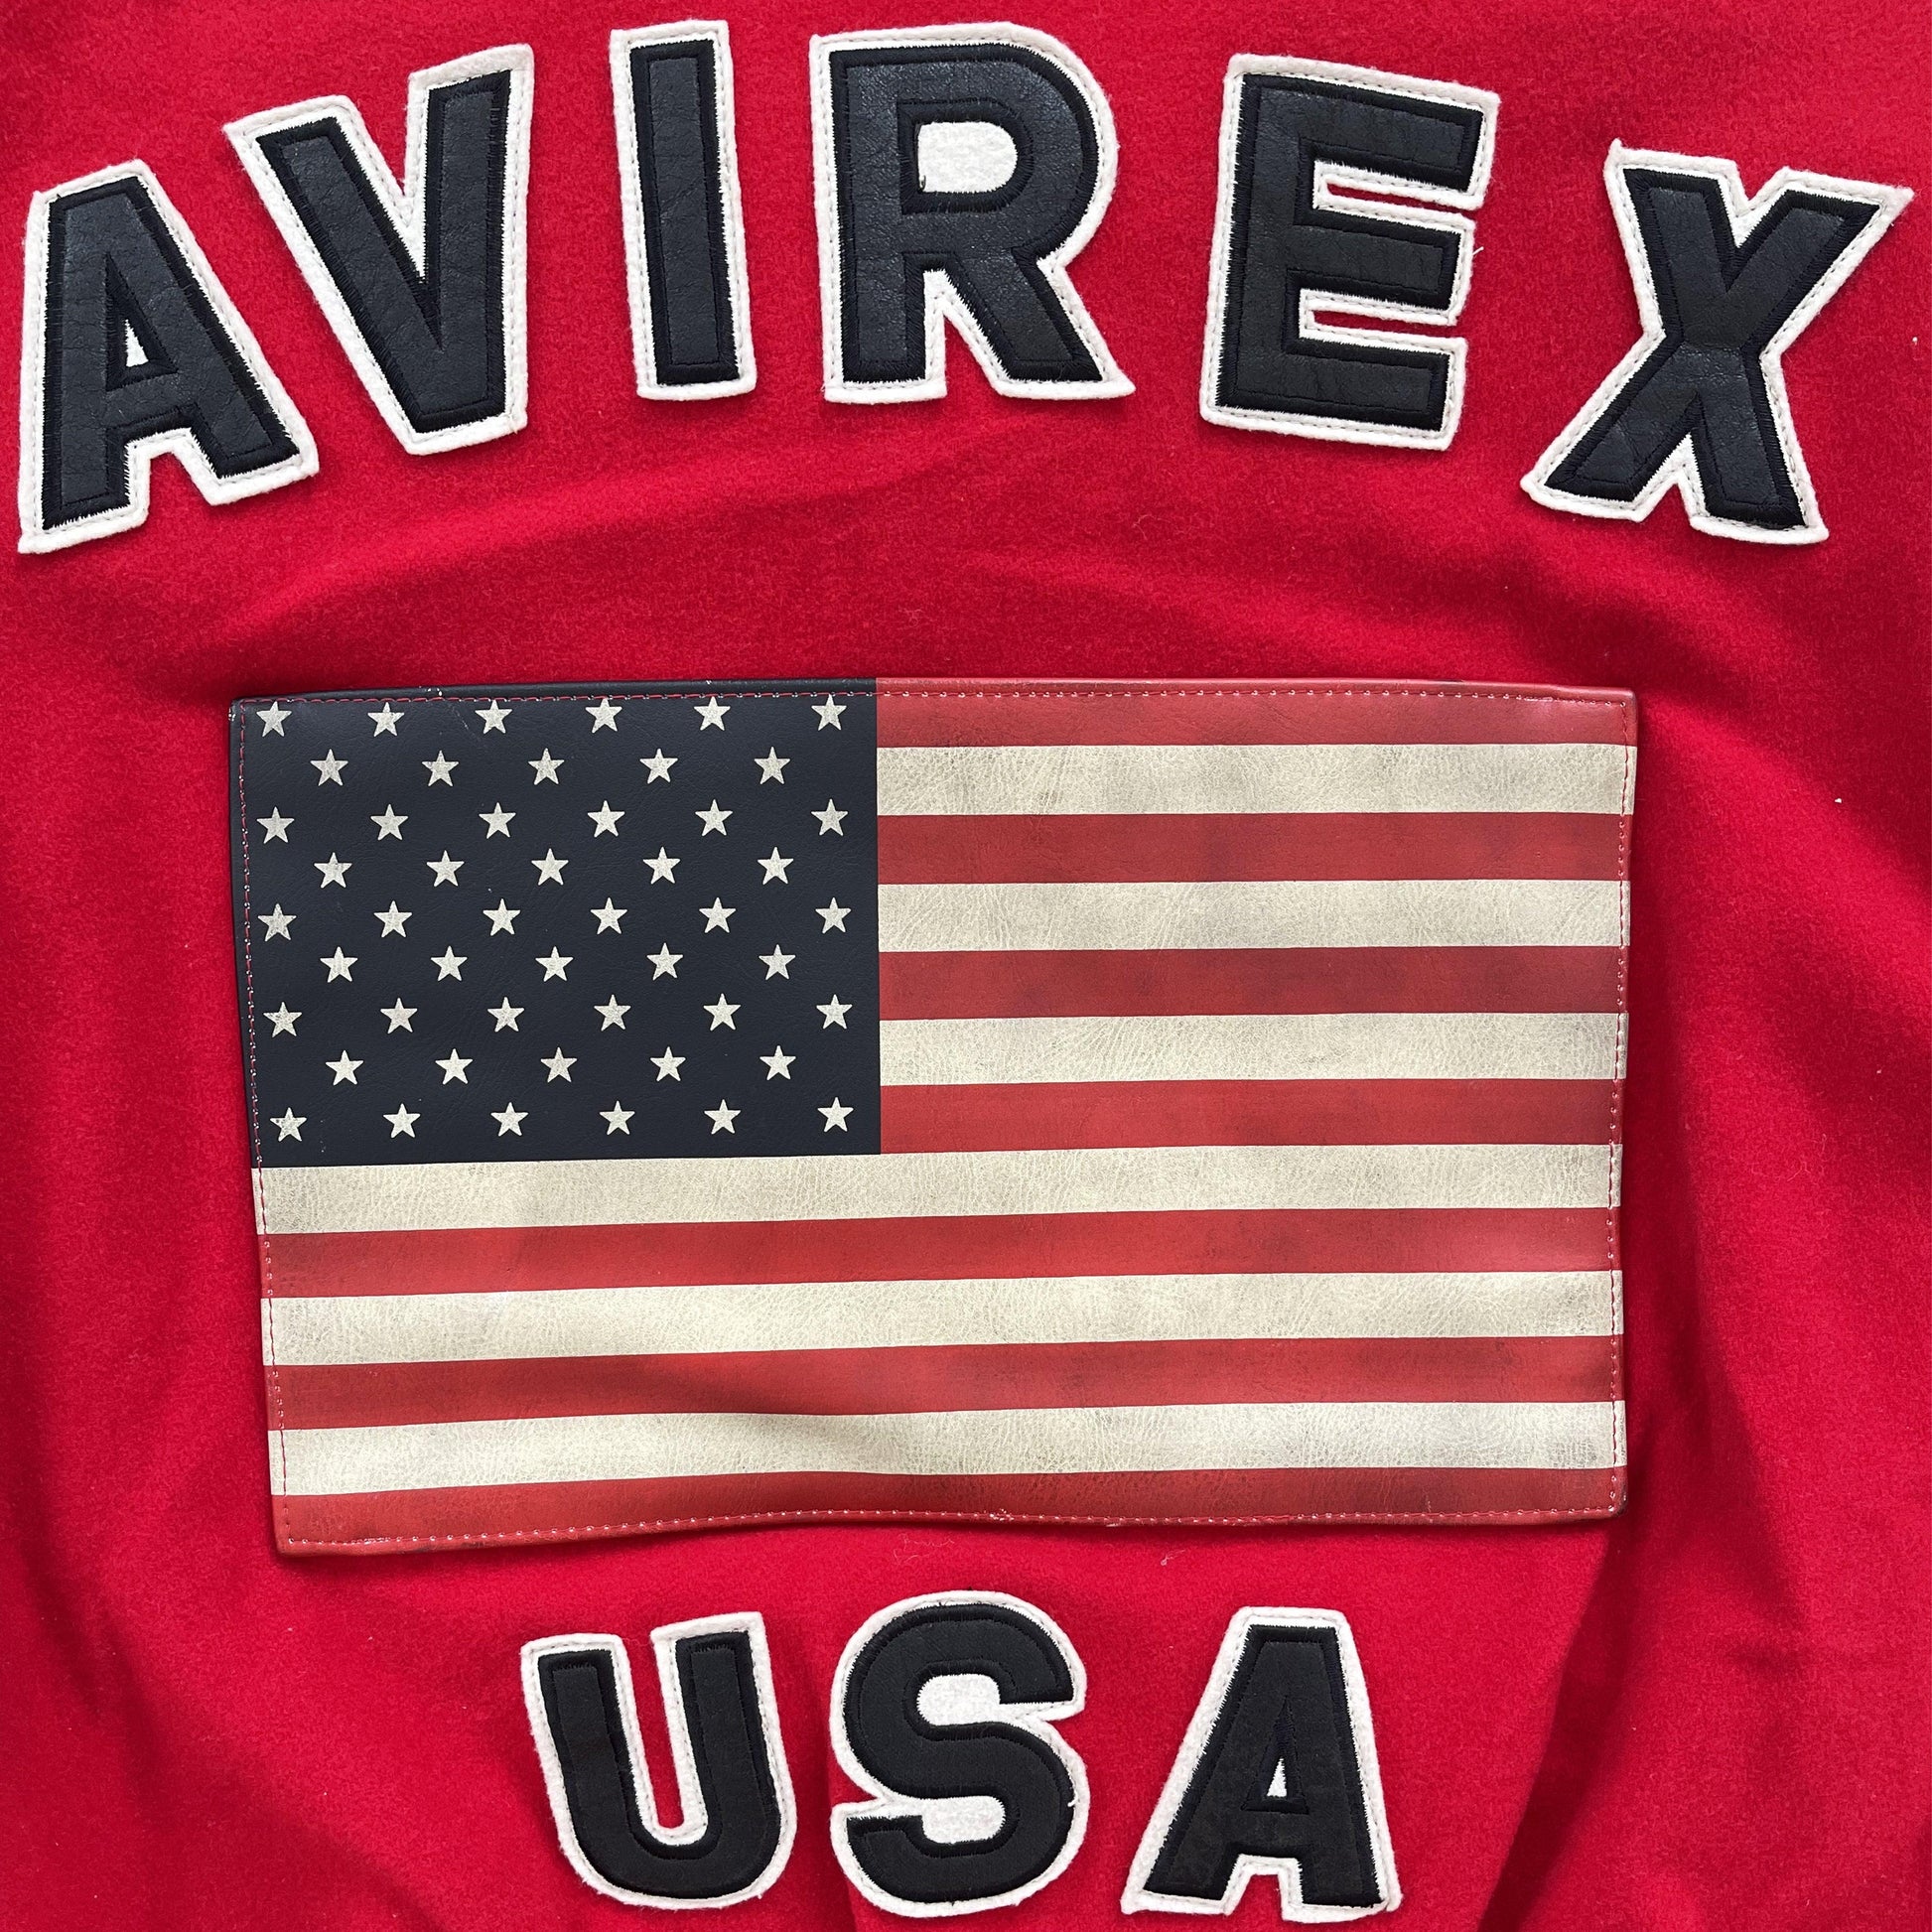 Avirex Varsity Jacket - Known Source